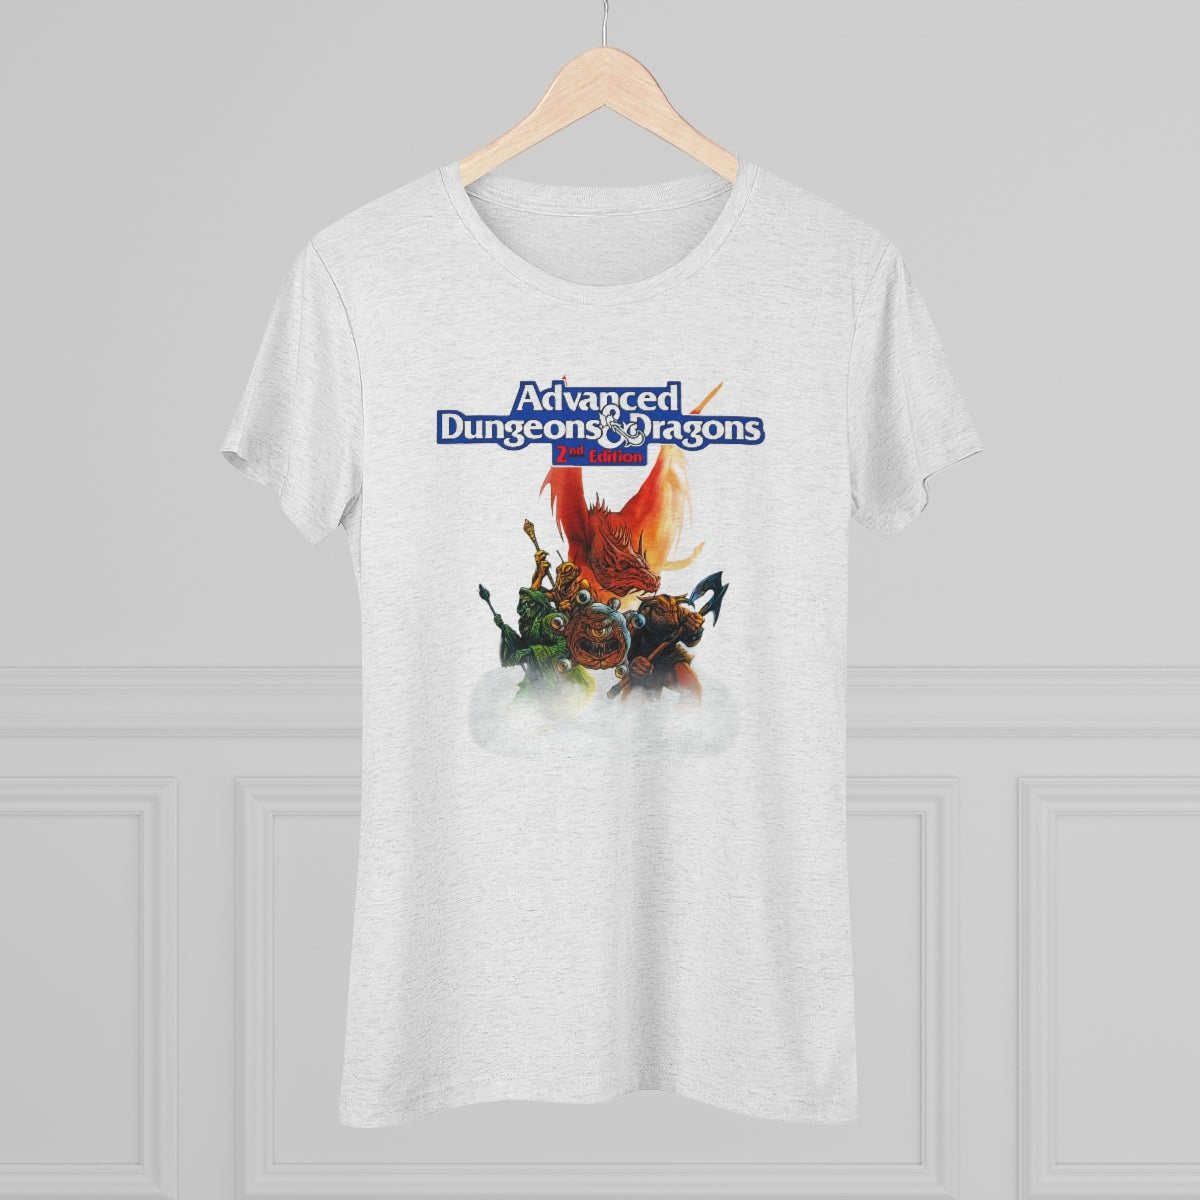 Advanced Dungeons & Dragons themed- Women - BrainStorm Tees - T-Shirt